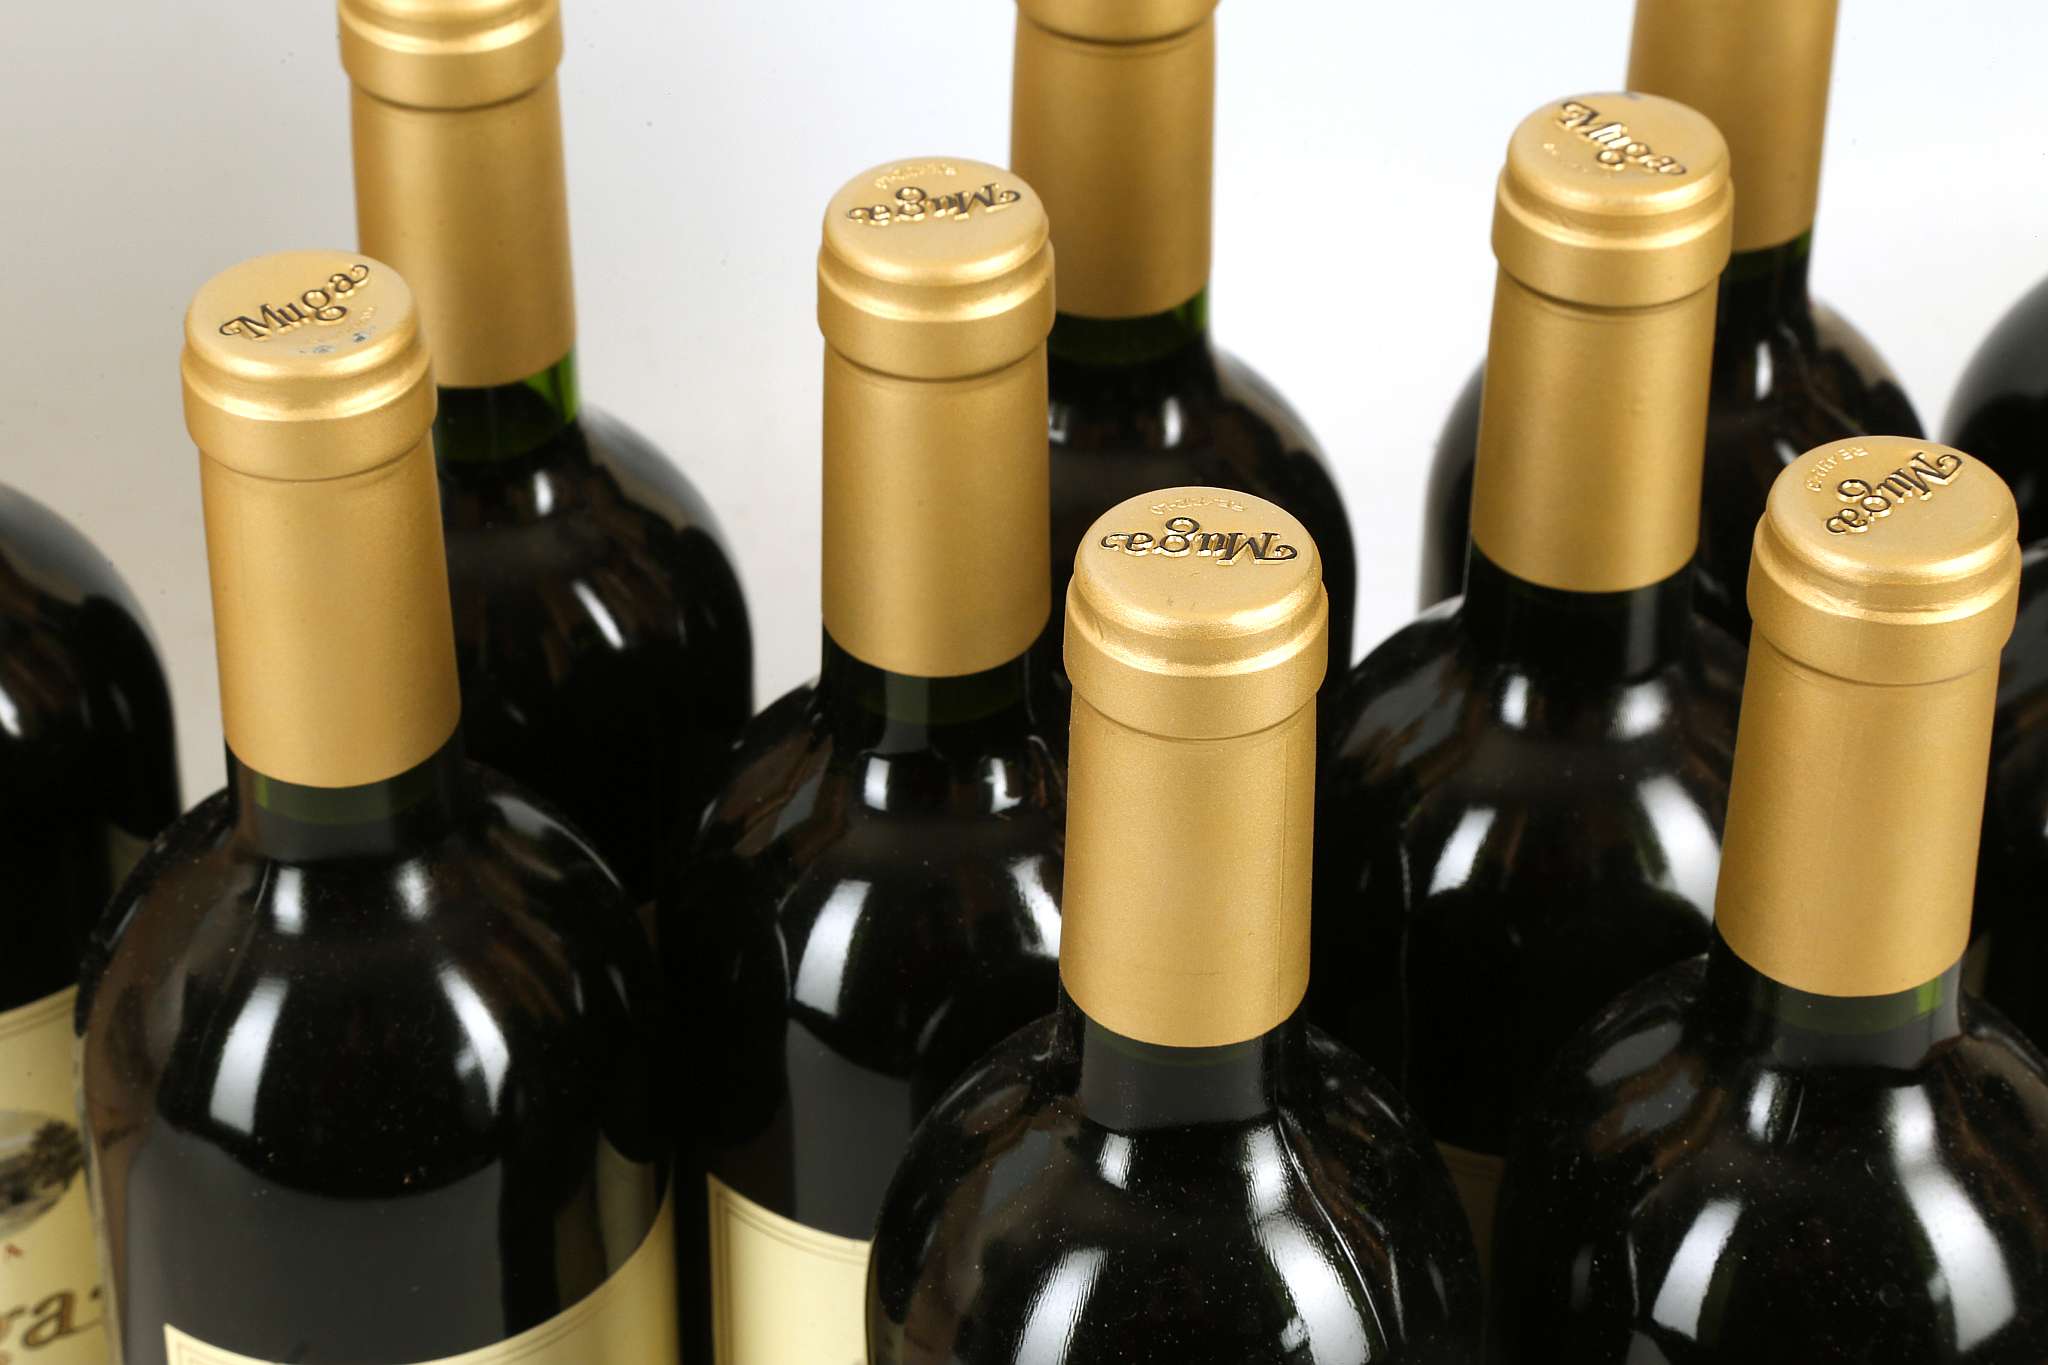 Eleven bottles of 1998 Rioja Muga, Reserva, Rioja Doca, in original box, 11 x 75cl (13% ABV). - Image 4 of 5